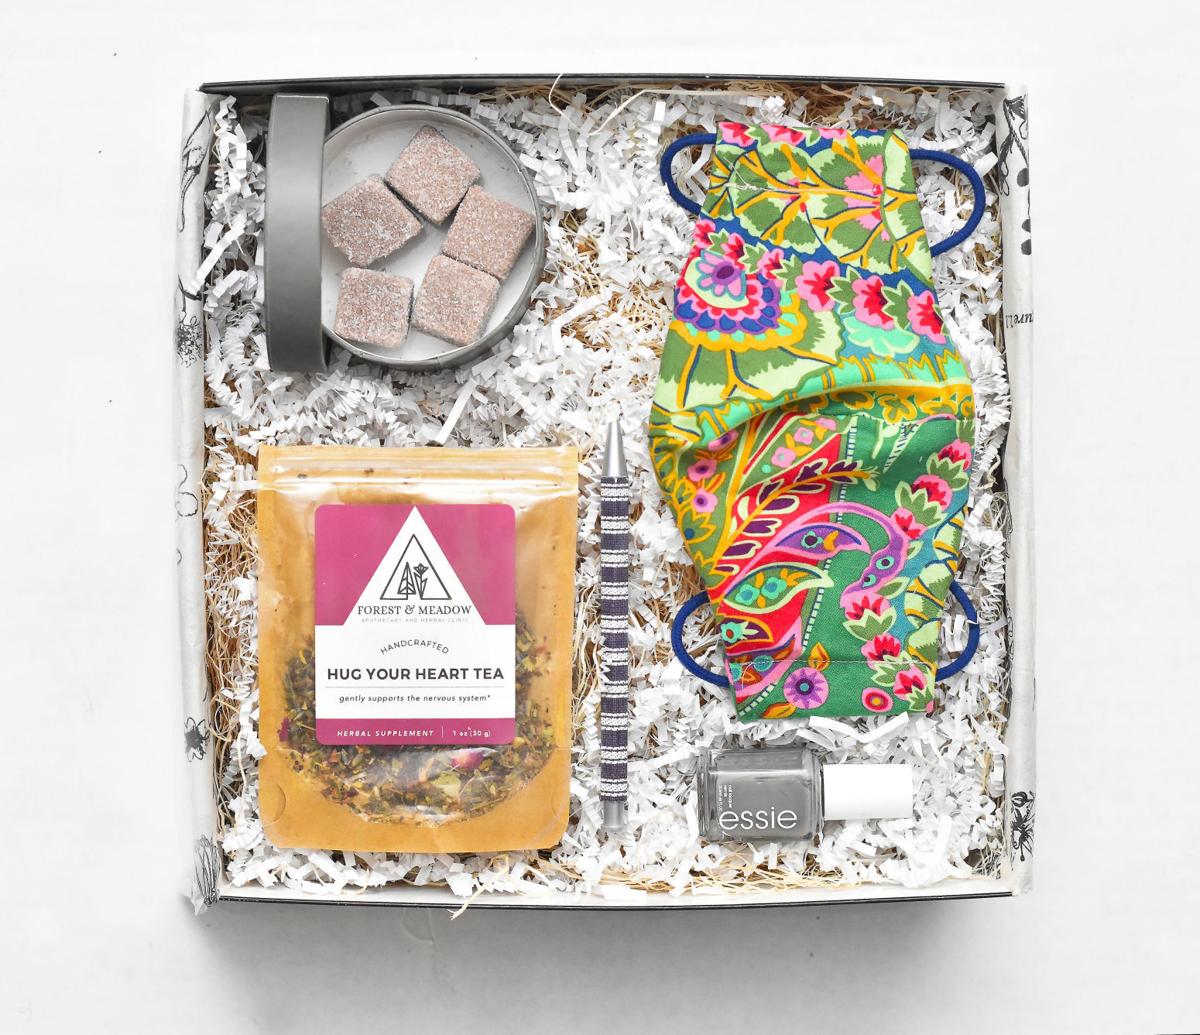 QeBoxMaker ‑ Gift Box Creator - Elevate Sales by Enabling